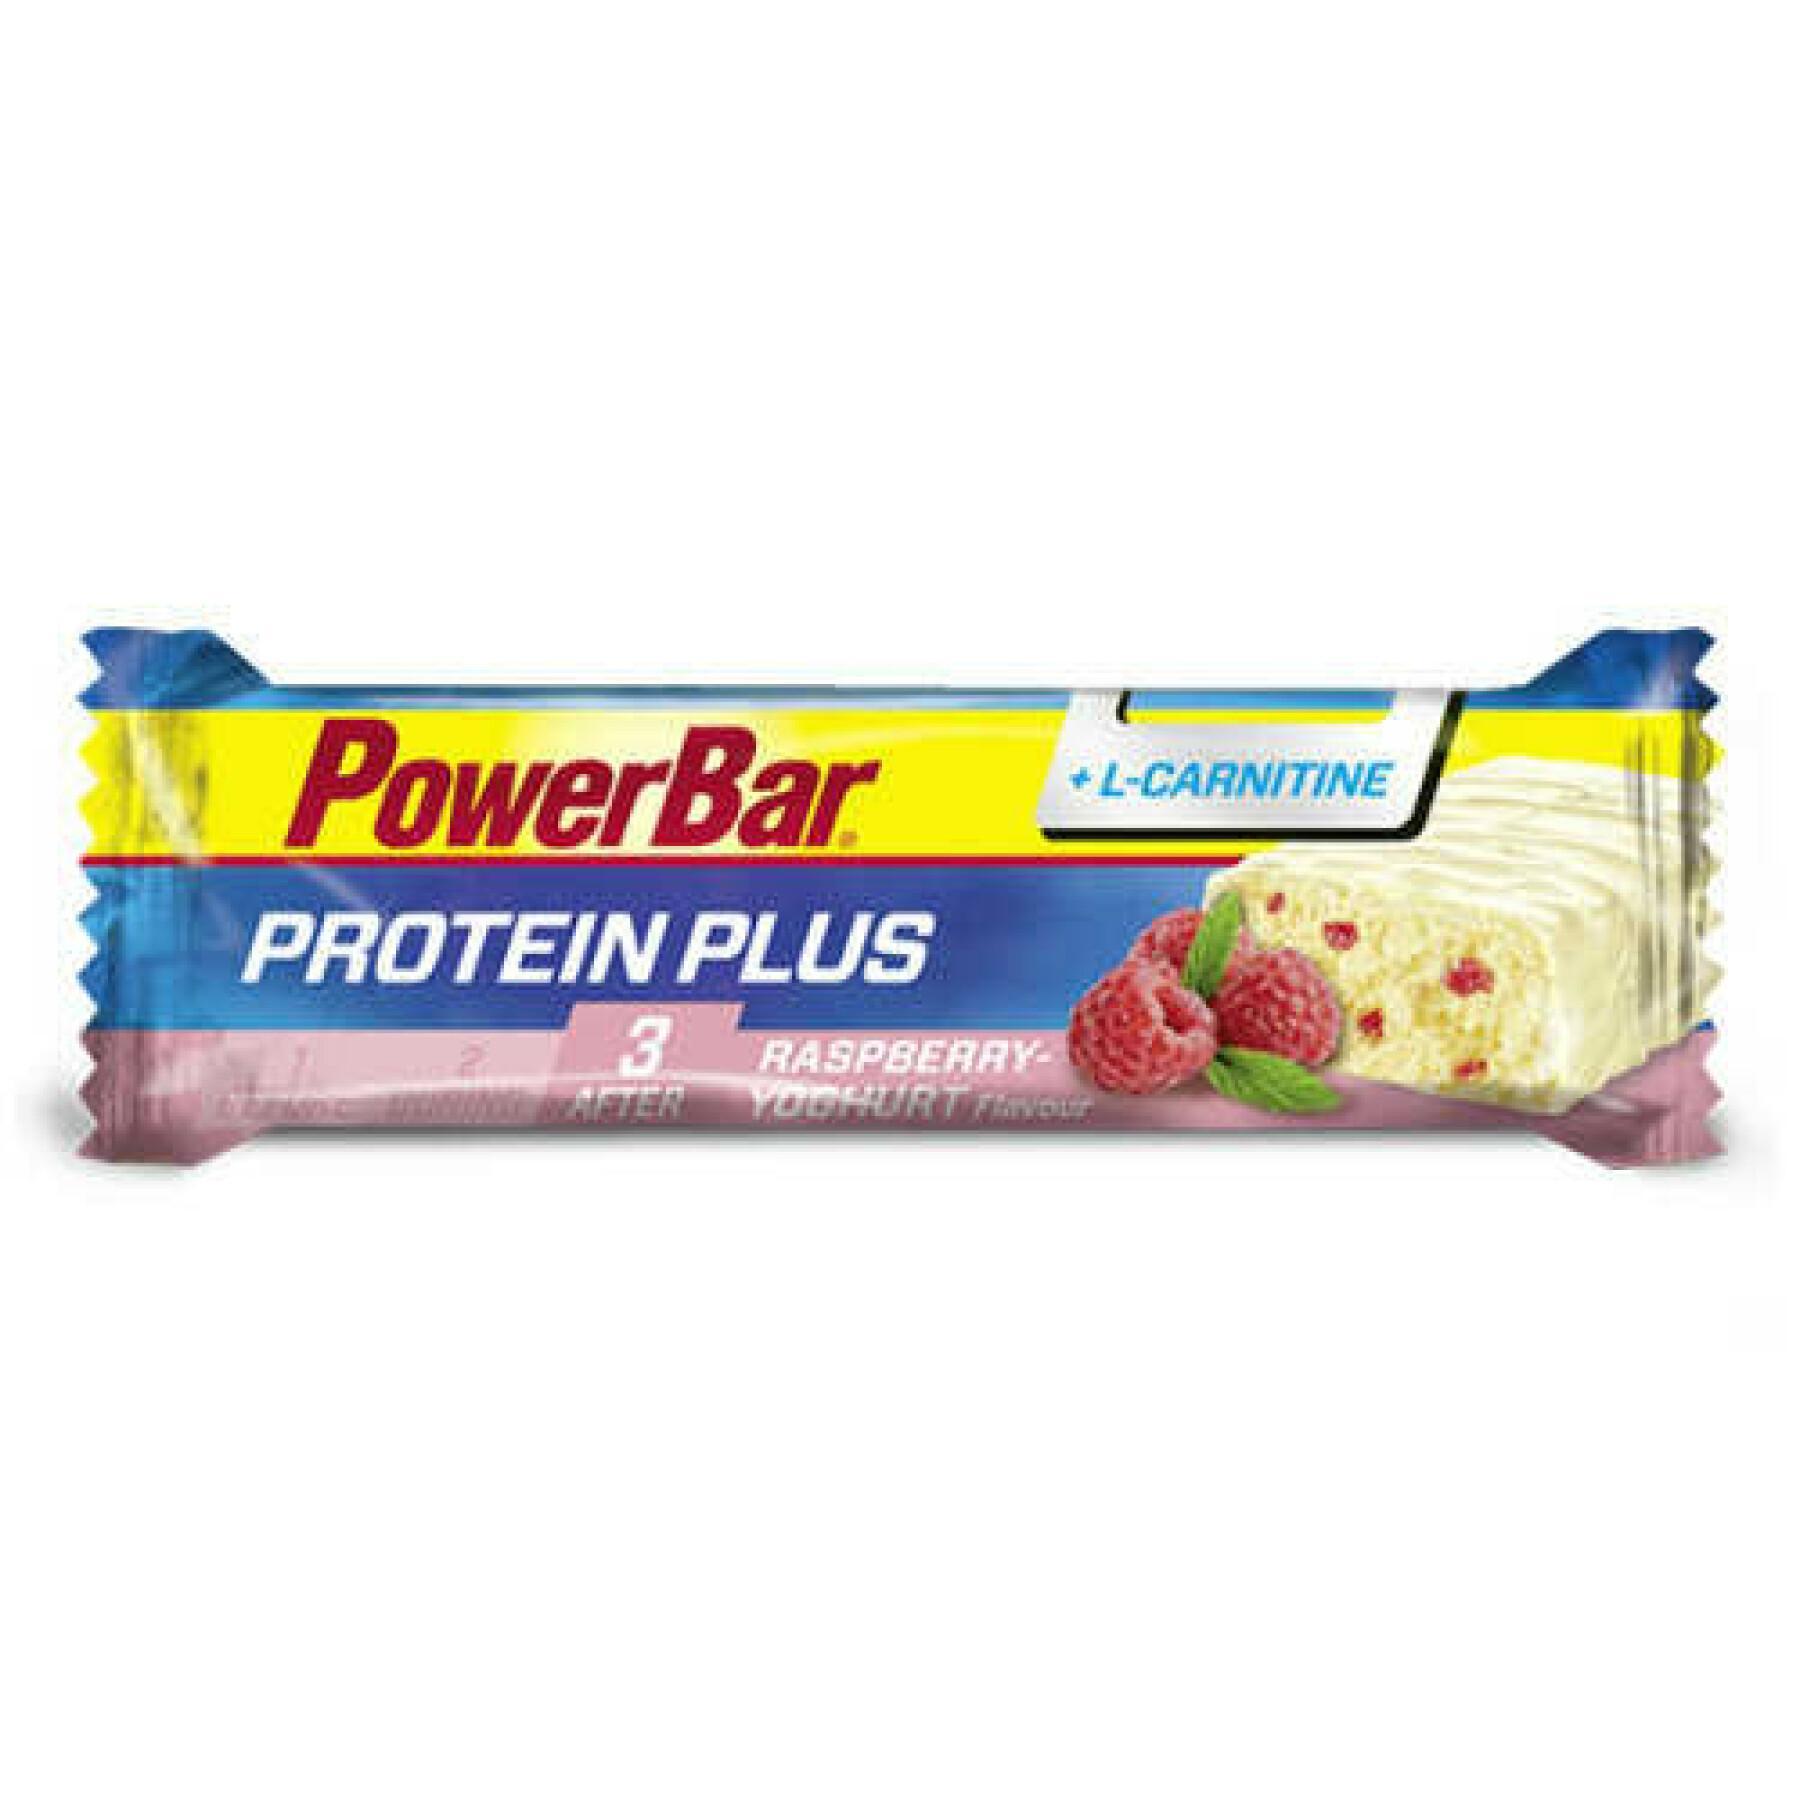 Confezione da 30 barrette PowerBar ProteinPlus L-Carnitin - Raspberry-Yoghurt